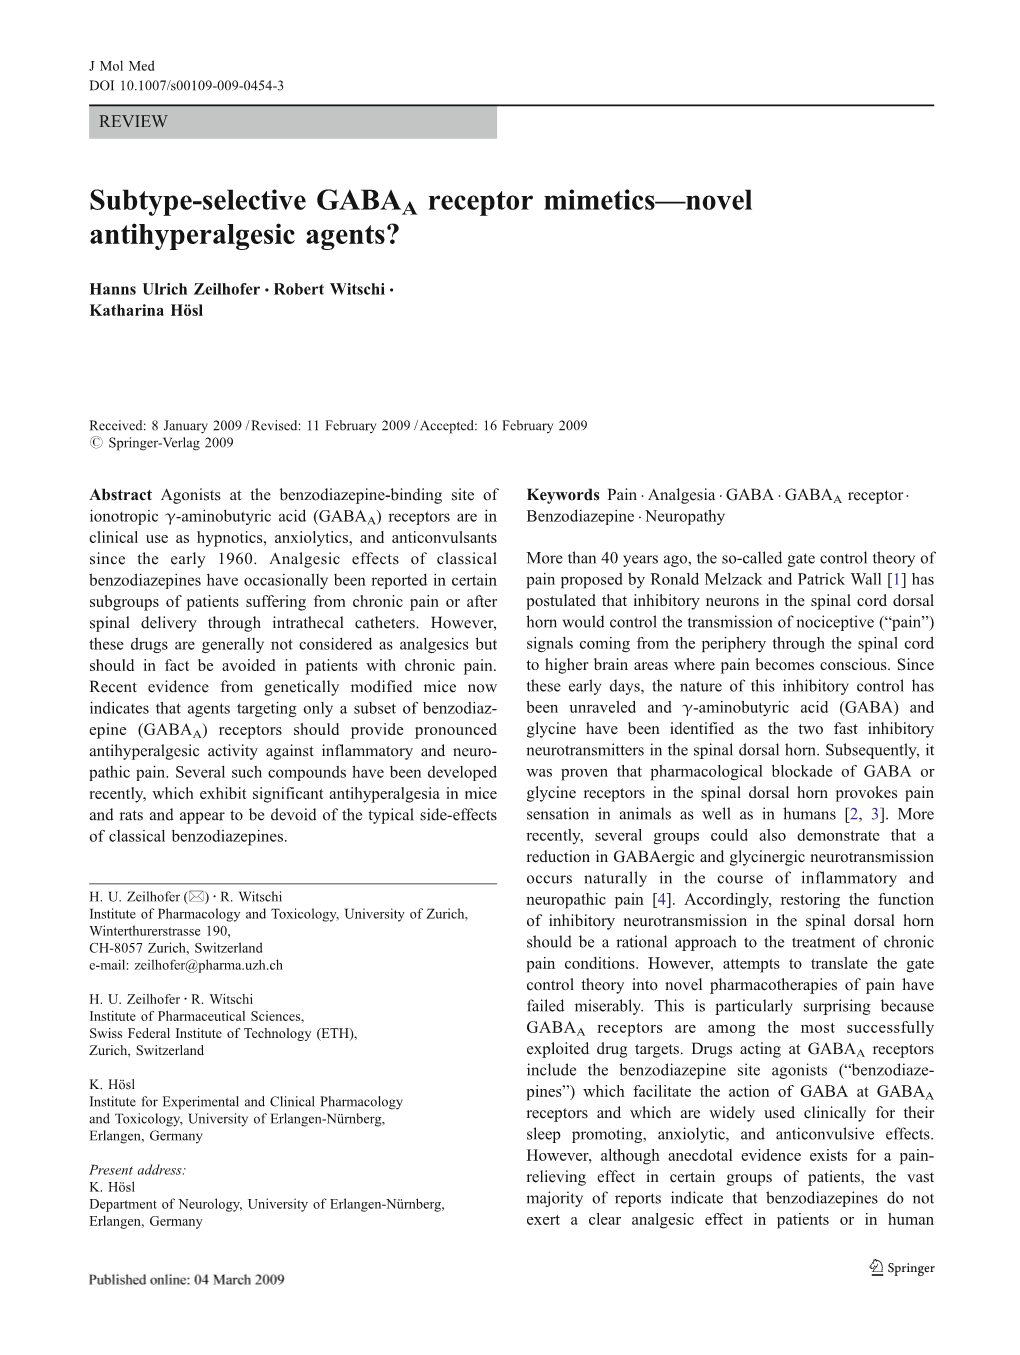 Subtype-Selective GABAA Receptor Mimetics—Novel Antihyperalgesic Agents?